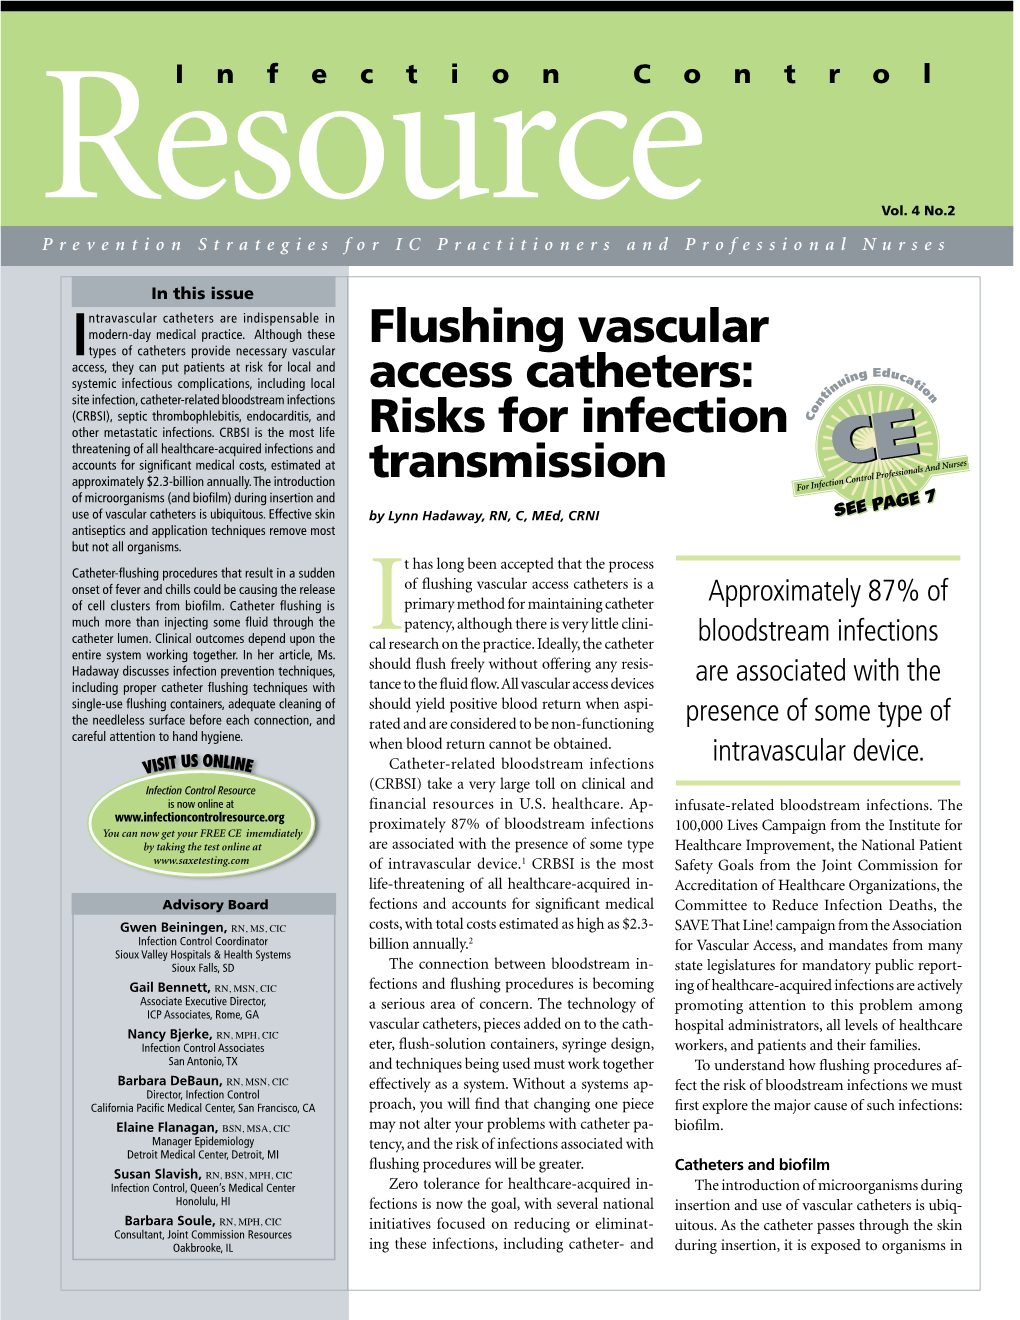 Flushing Vascular Access Catheters: Risks for Infection Transmission